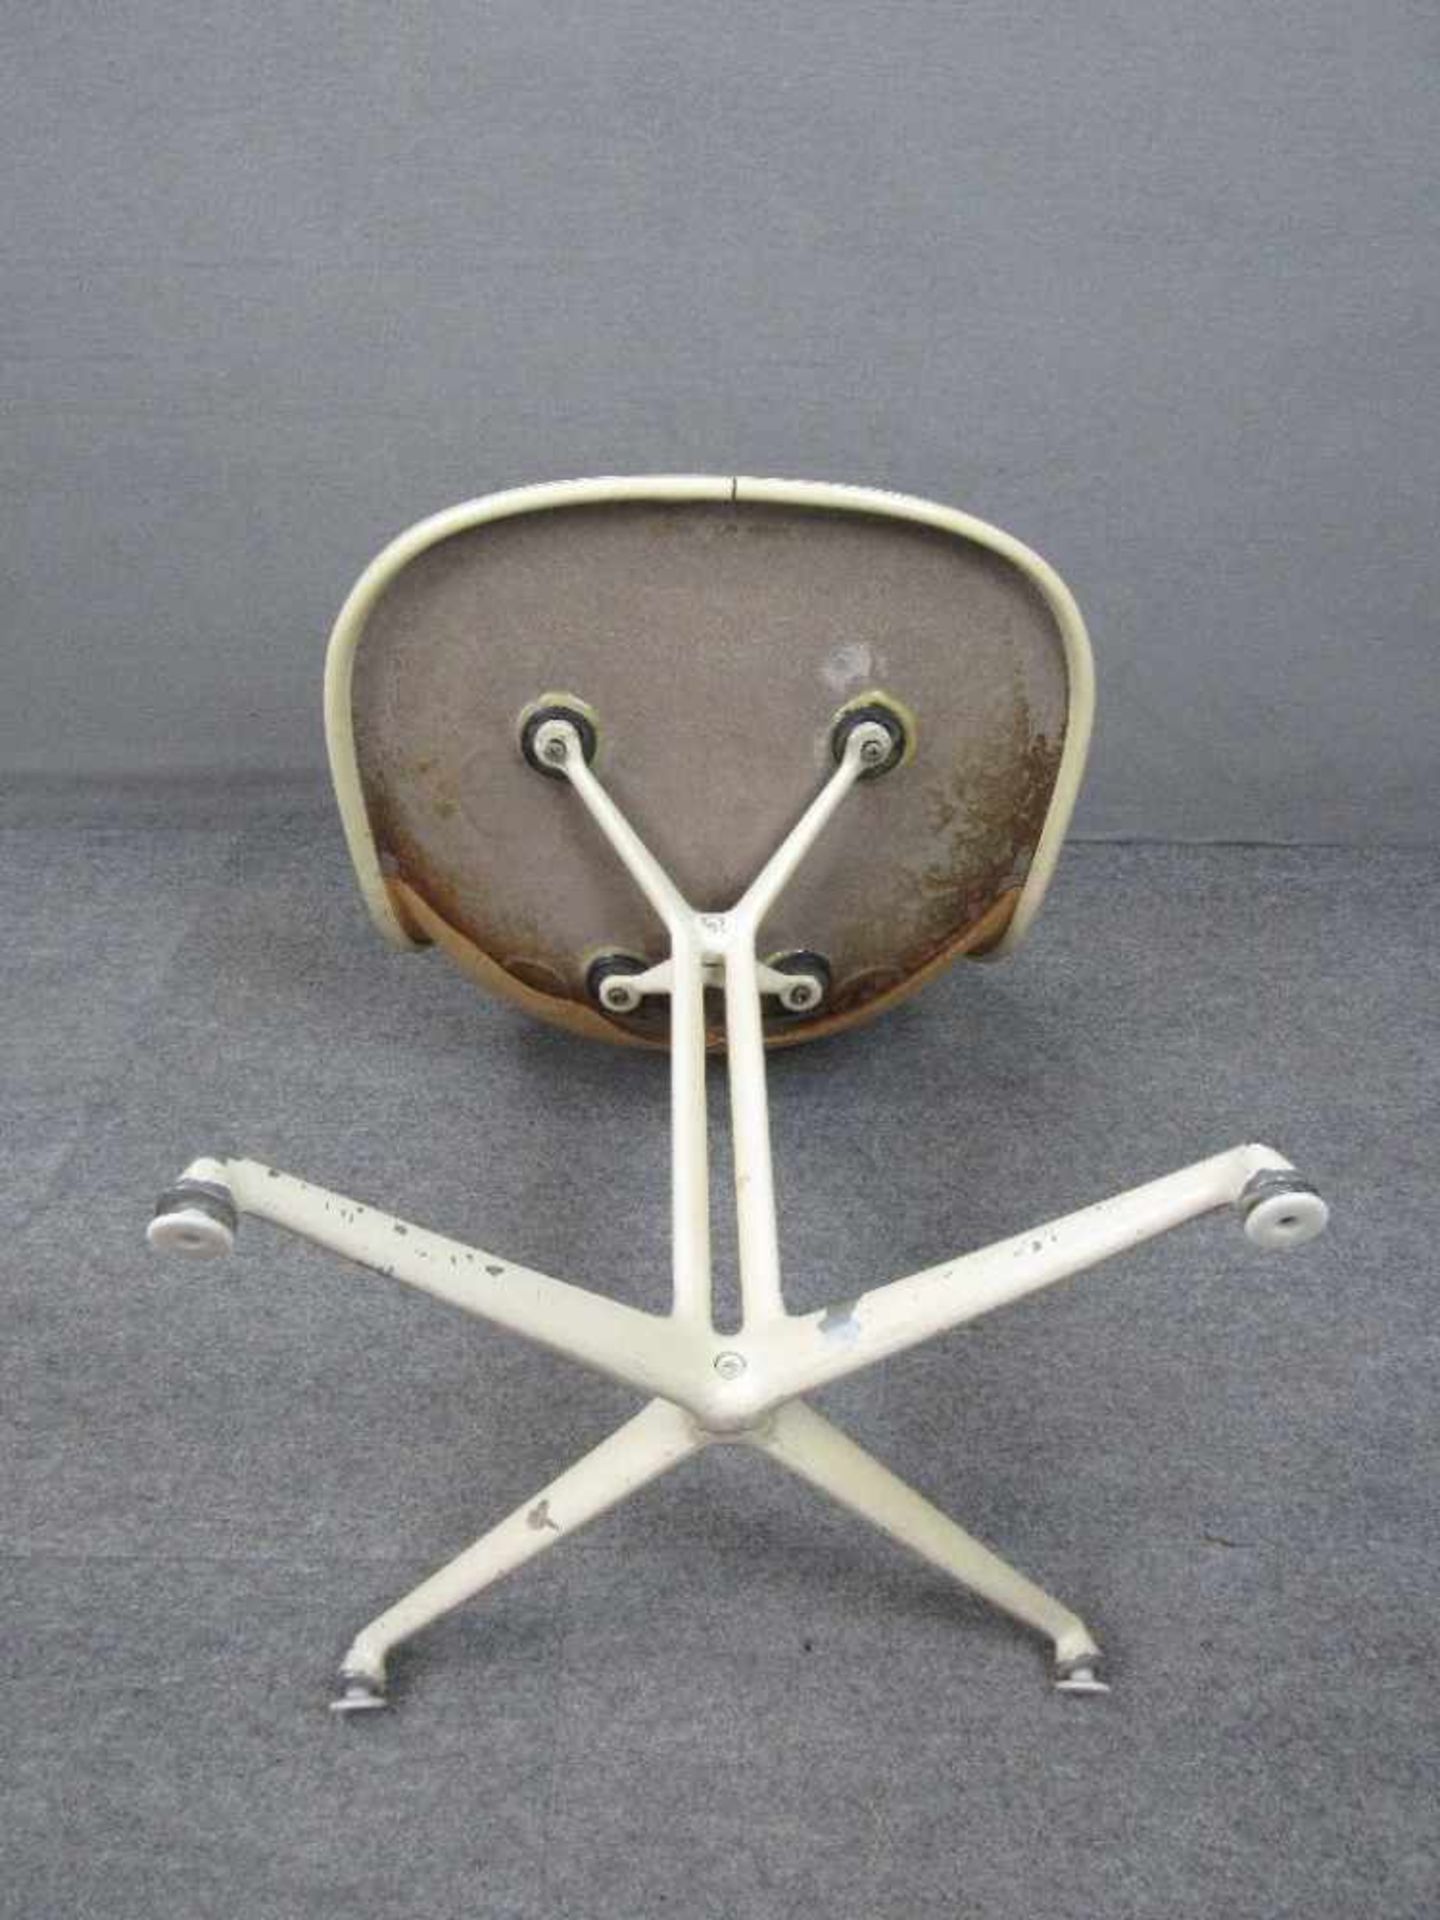 Vintage Stuhl Eams Fiberglas mit Lederbezug auf La Fonda Base Side Chair Charles & Ray Eames - Bild 5 aus 5